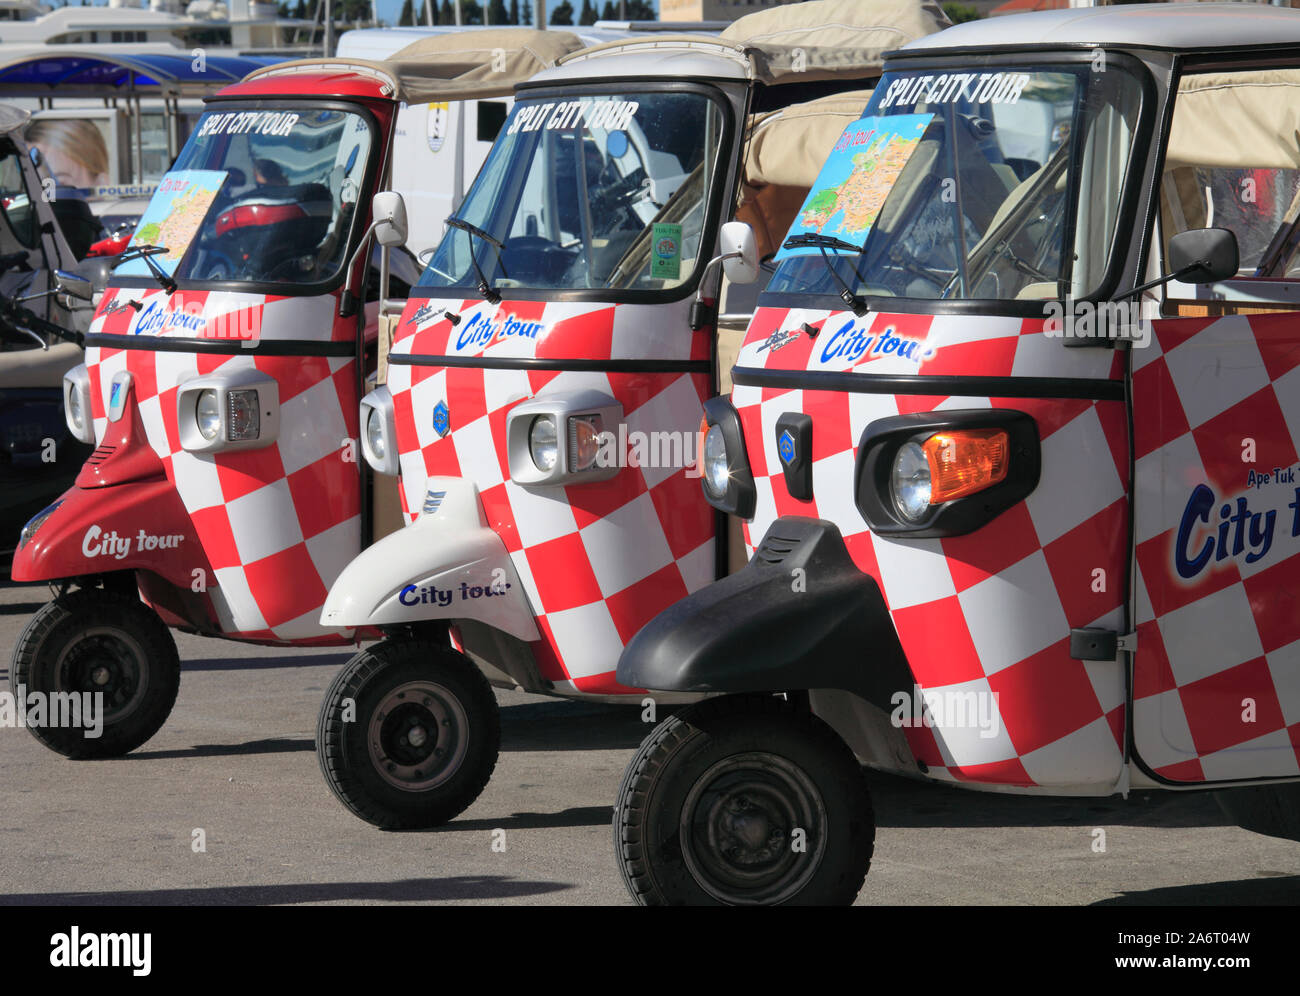 Croatia, Split, city tour vehicles, Stock Photo